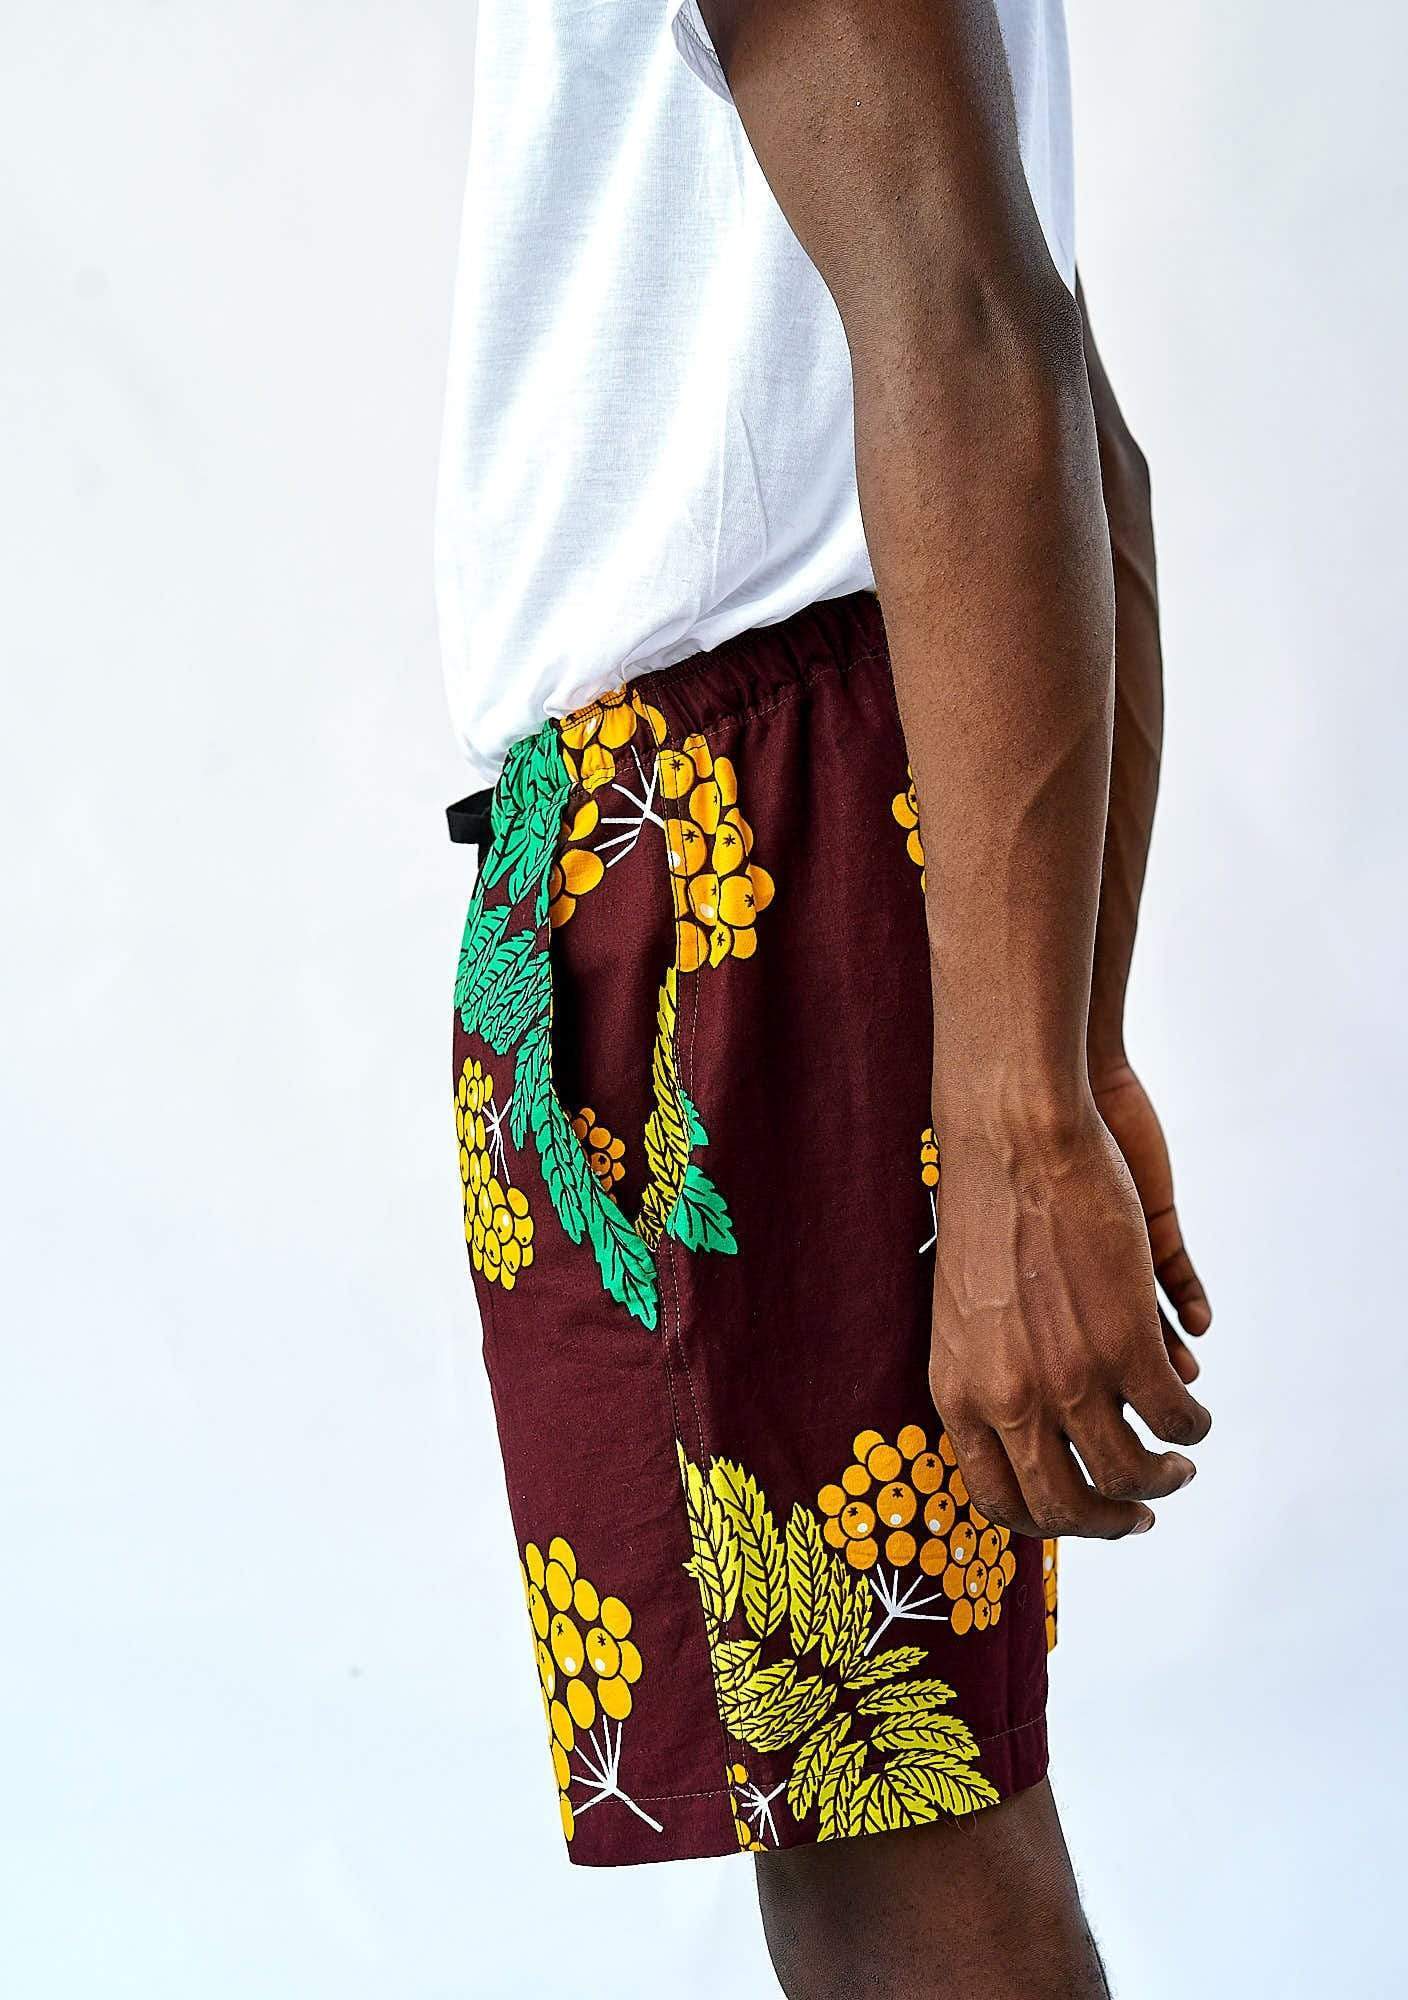 YEVU Men - Trousers Shorts - Night Jungle